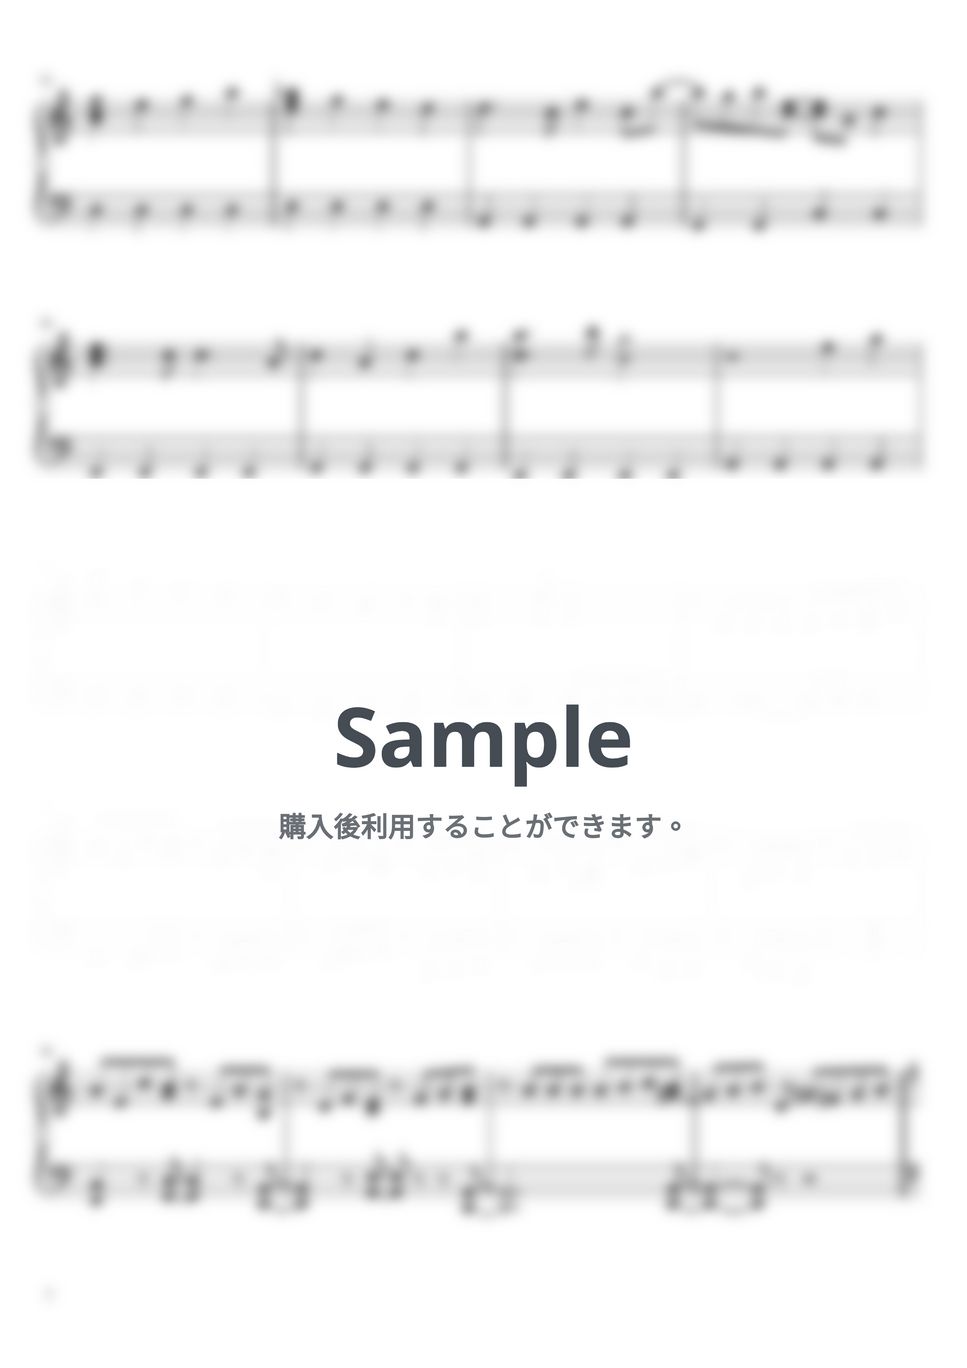 YOASOBI - 祝福 (機動戦士ガンダム / ピアノ楽譜 / 初級) by Piano Lovers. jp